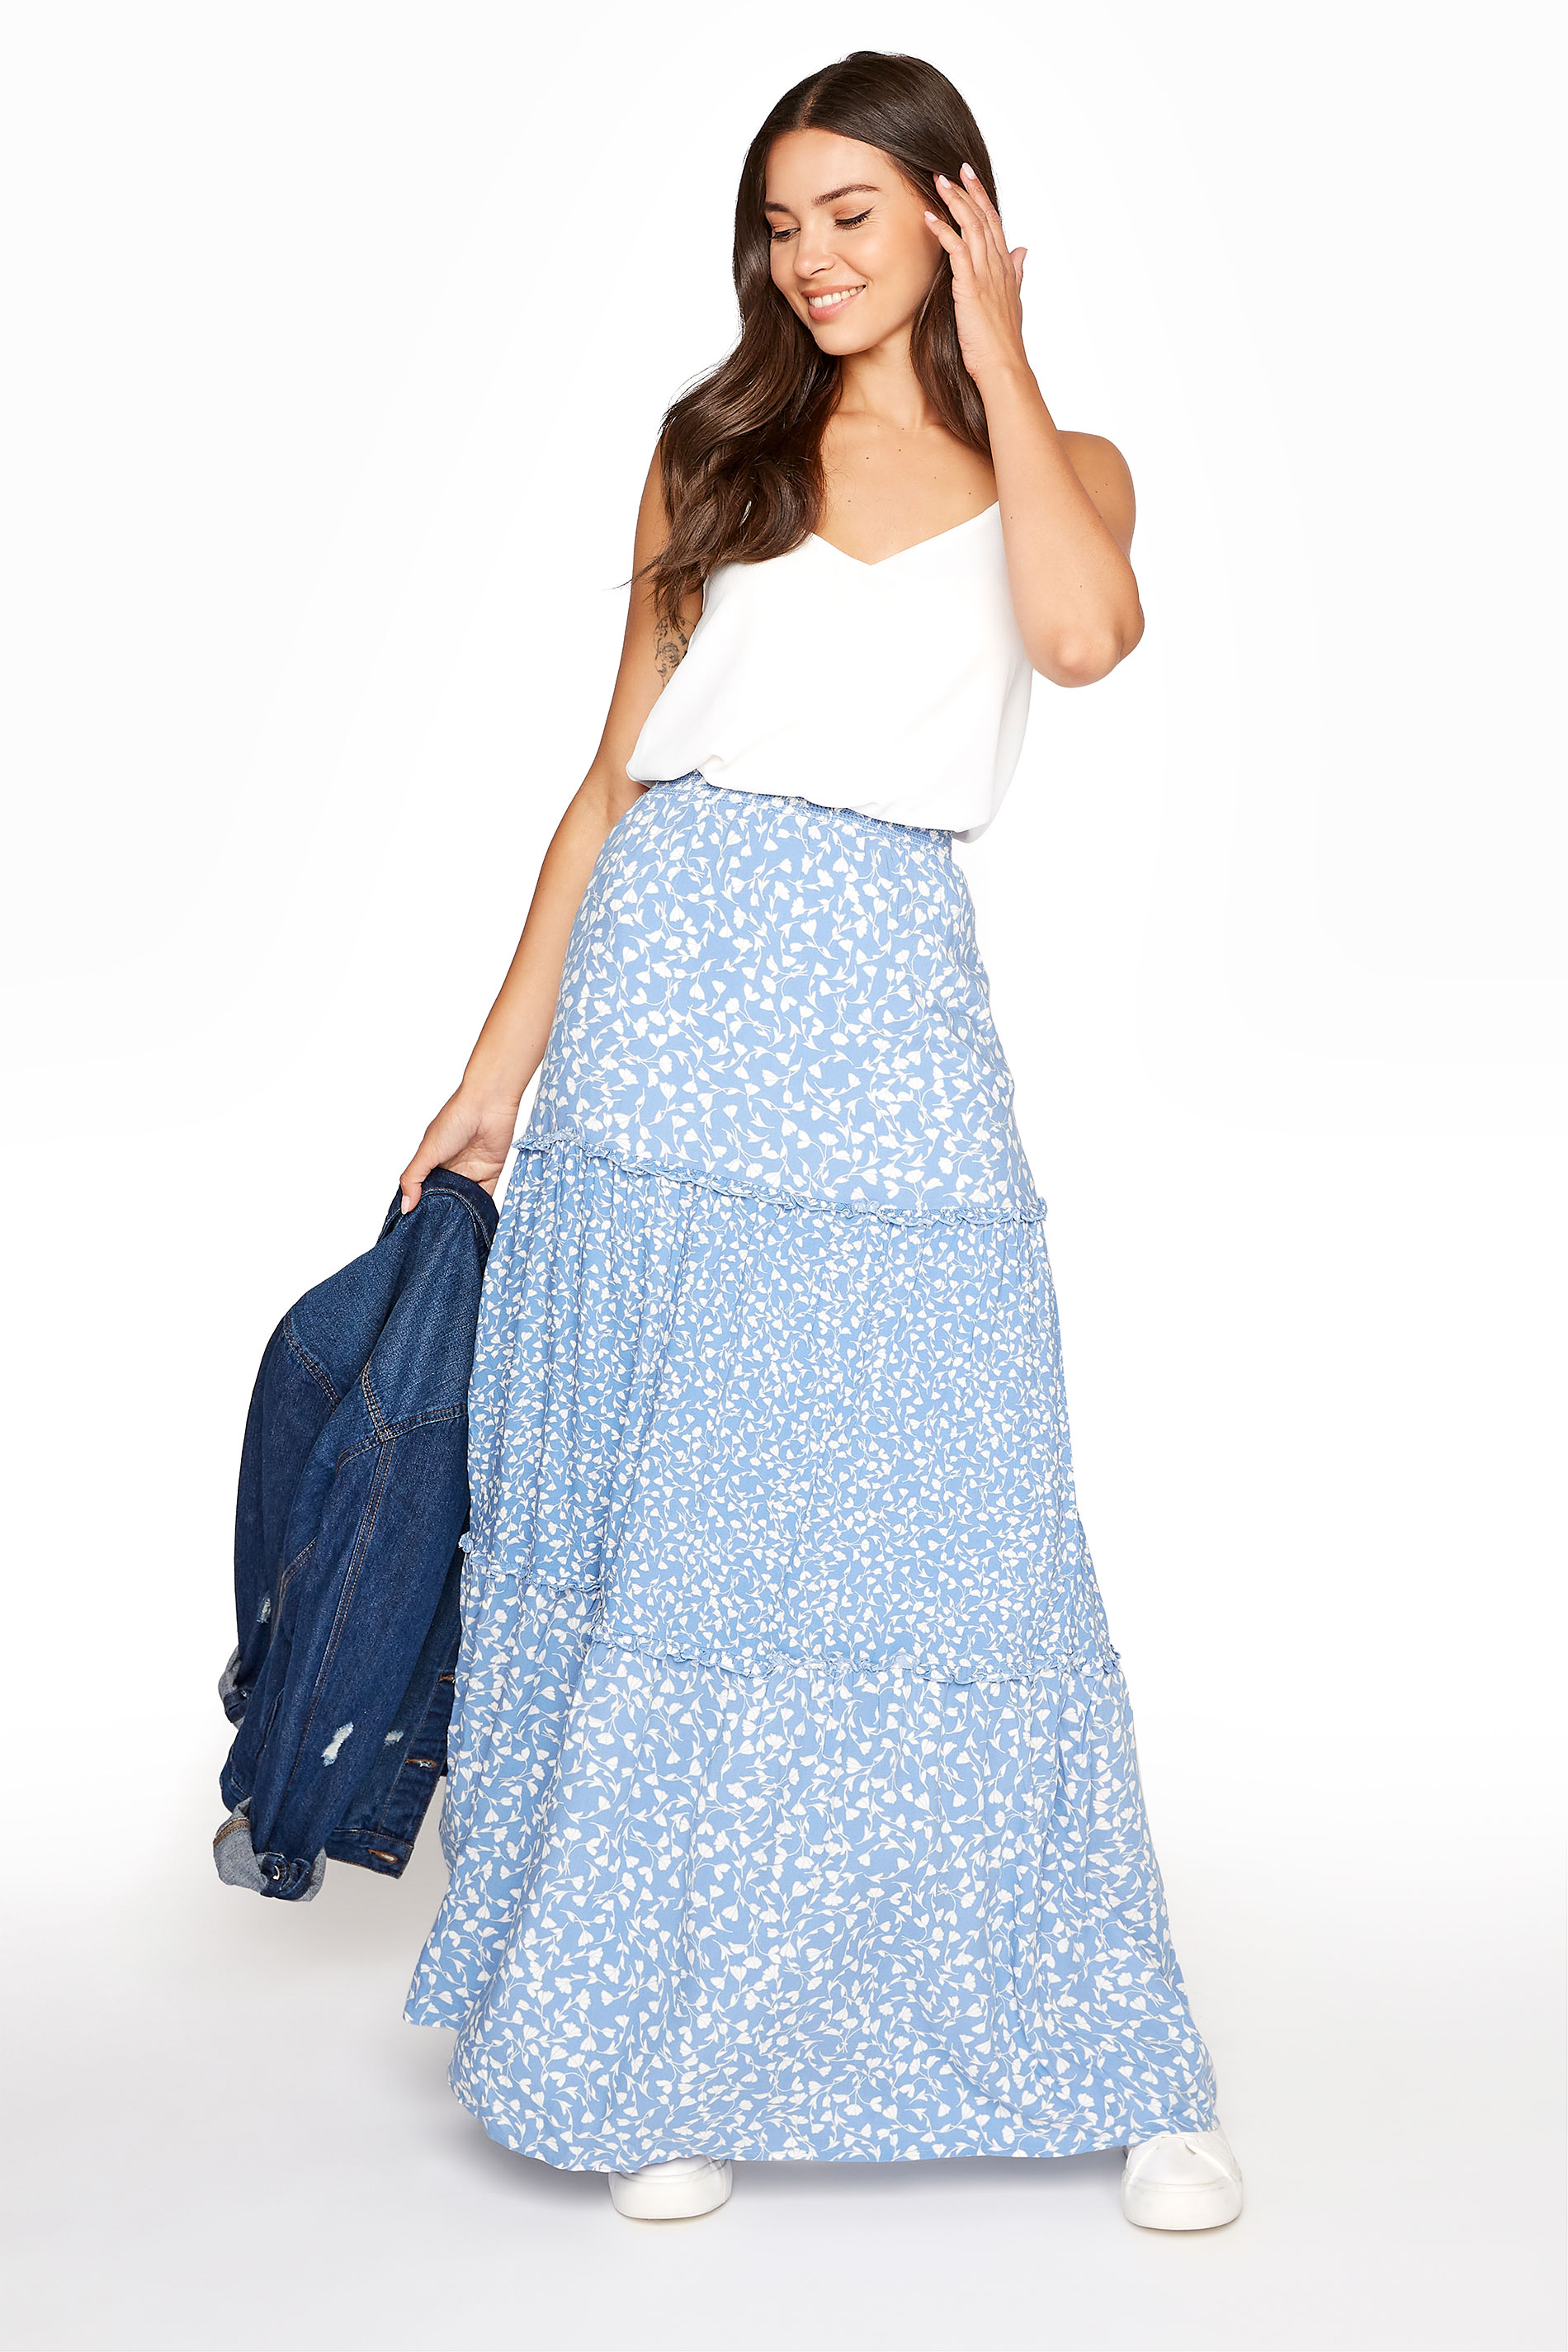 light blue top with skirt